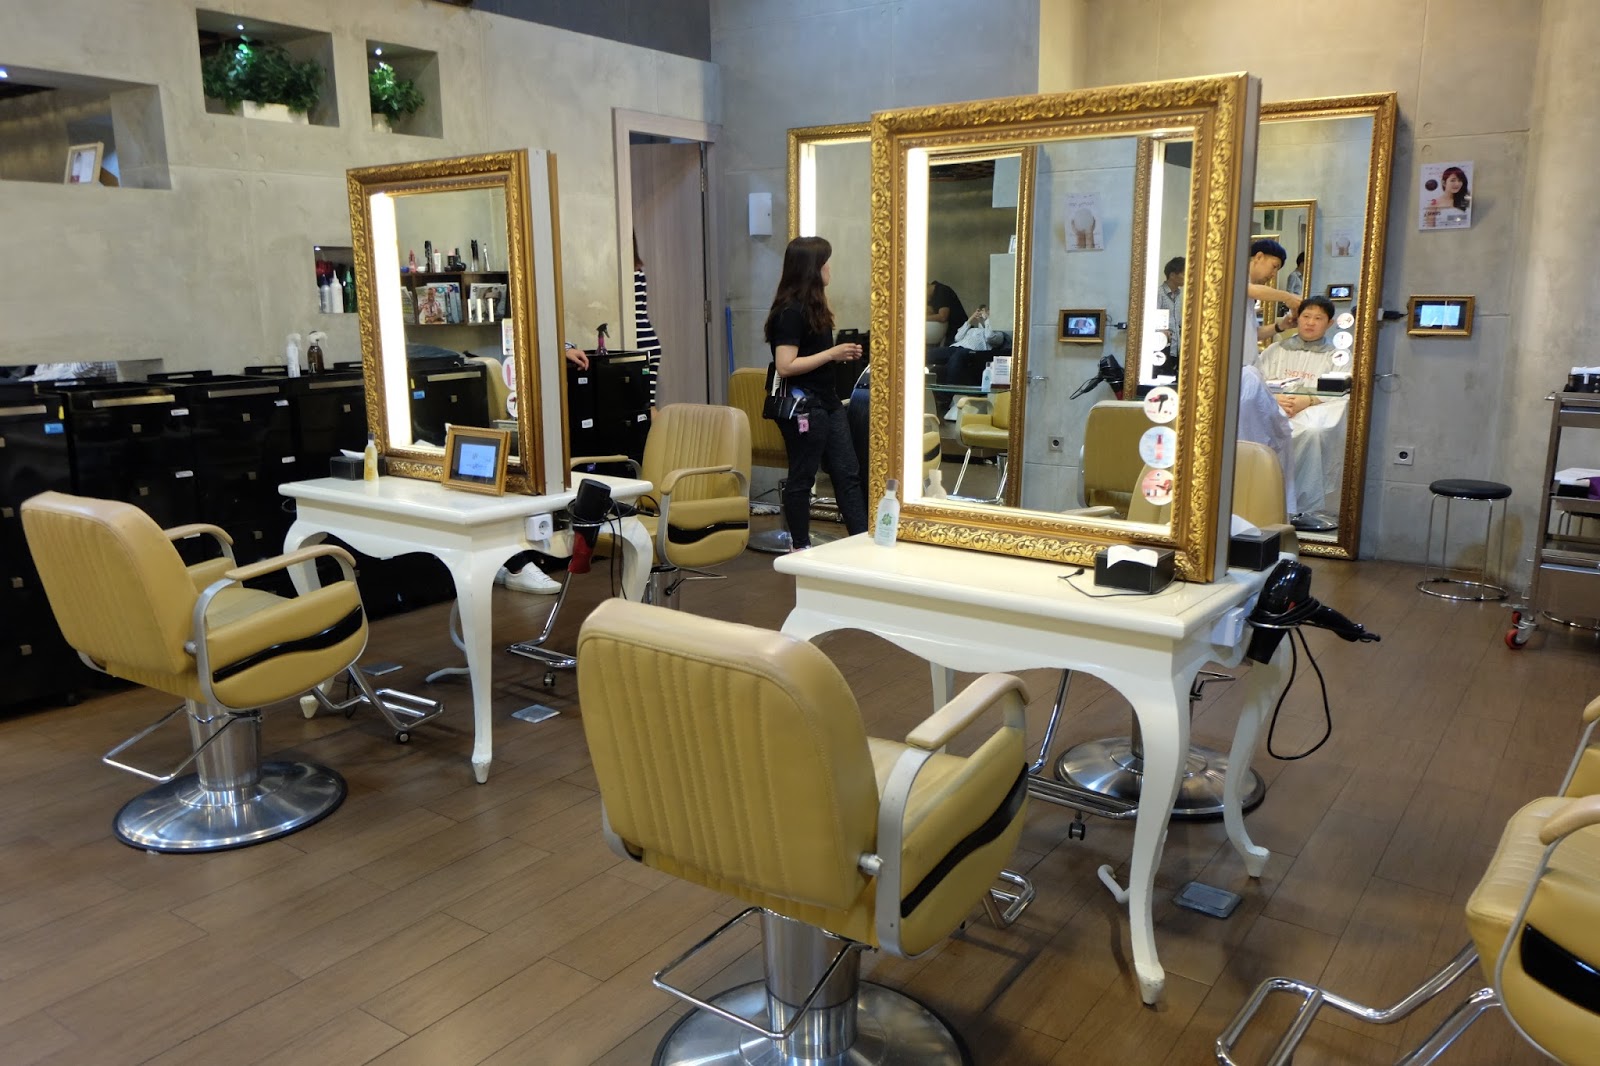 penulusuran salon murah di jakarta selatan | cerita tentang kehidupan